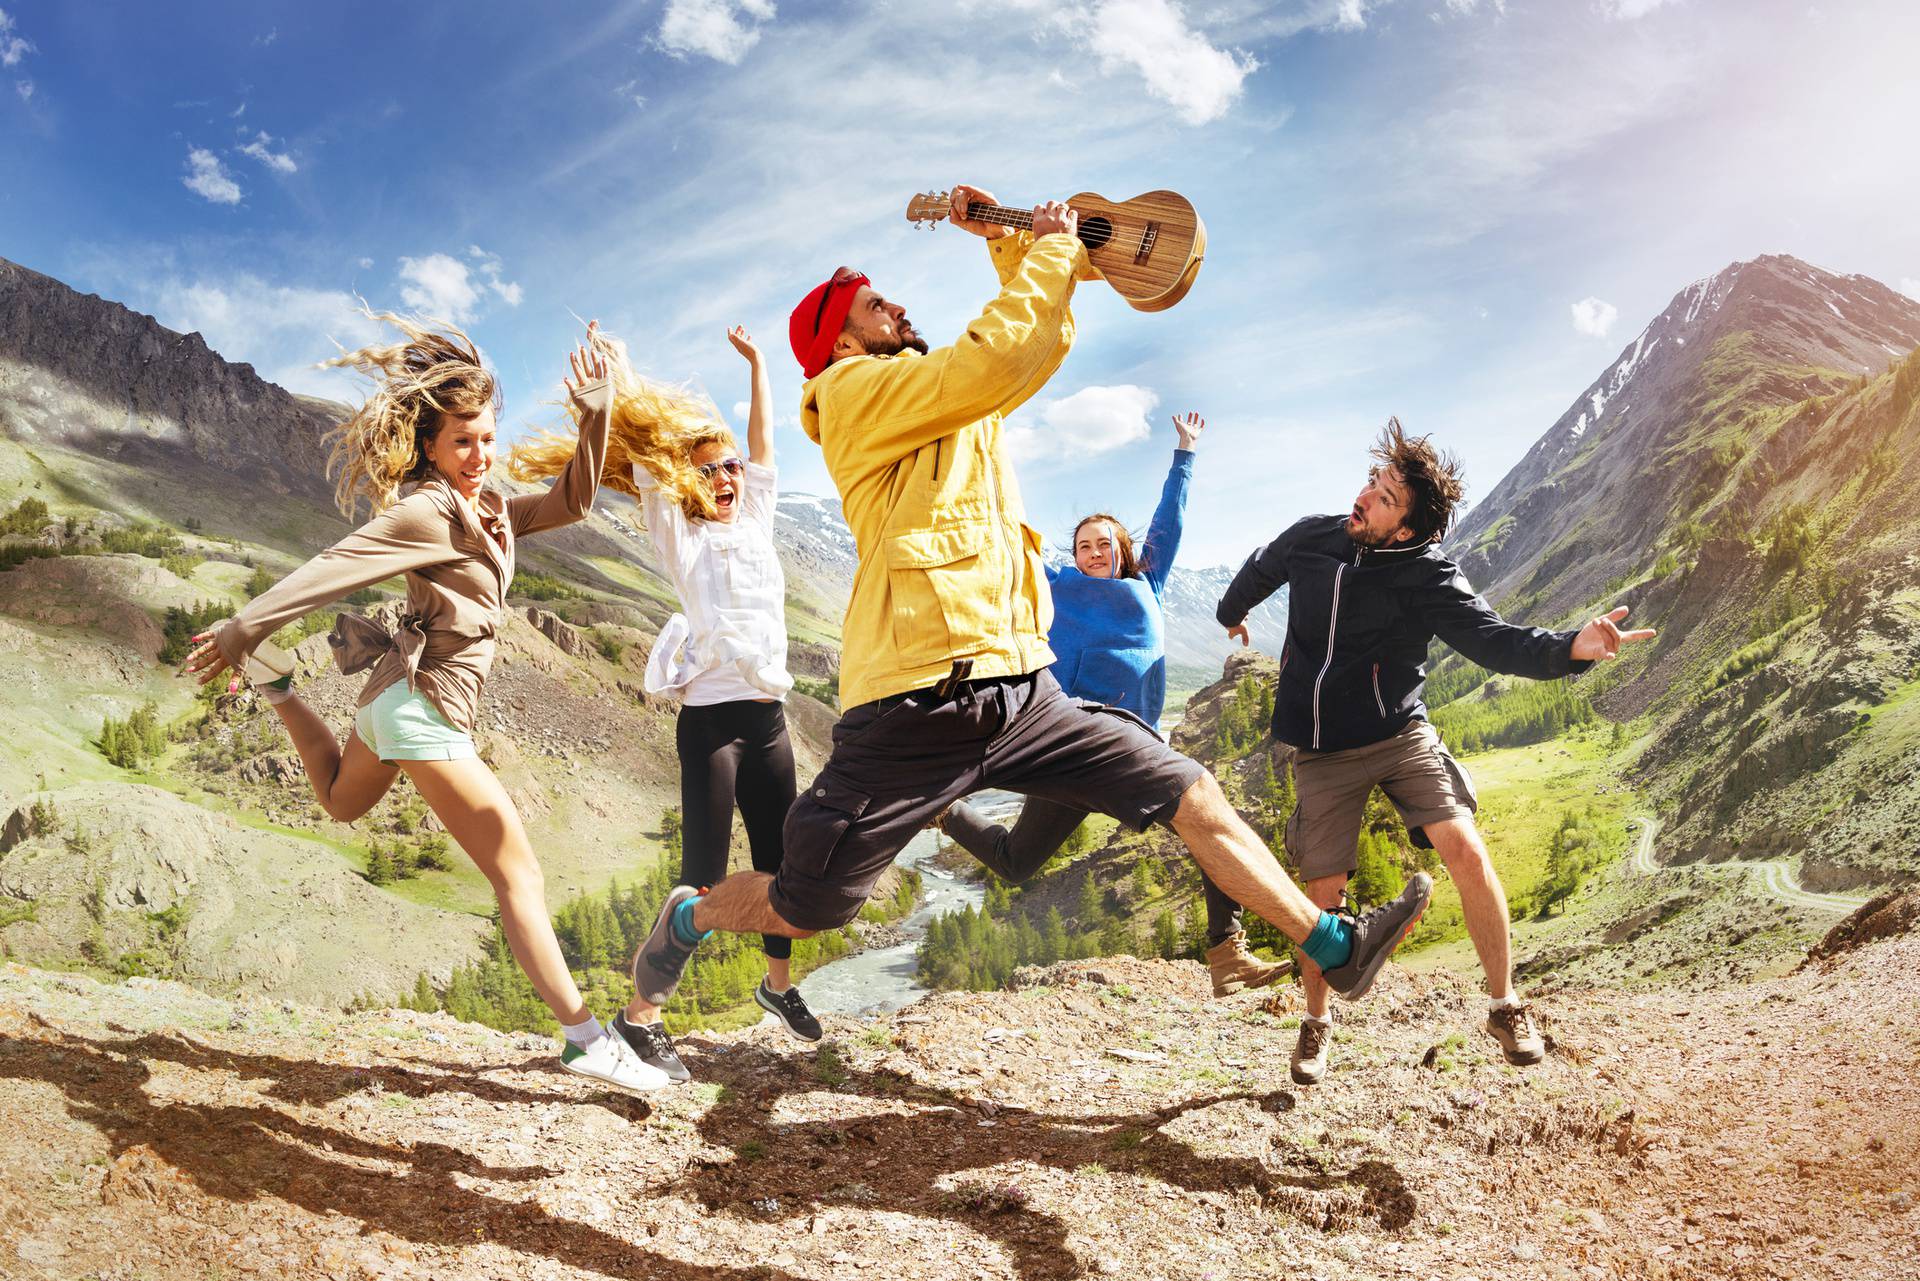 Group of happy friends music jumps trekking fun